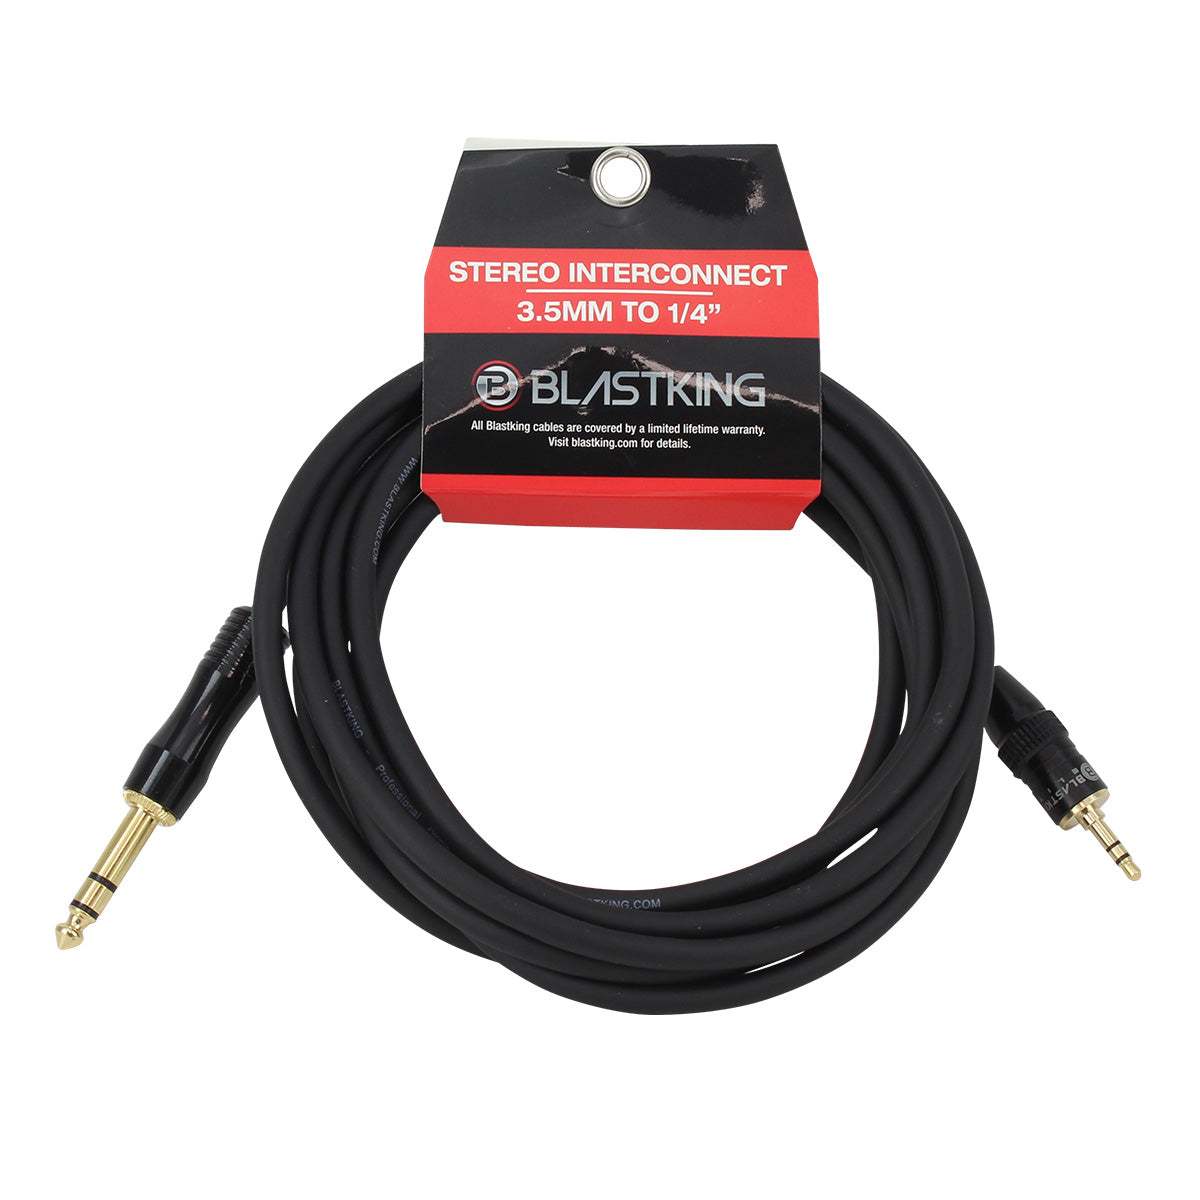 Blastking CQ35B-10 Stereo Interconnect 3.5mm to 1/4" - 10 Ft